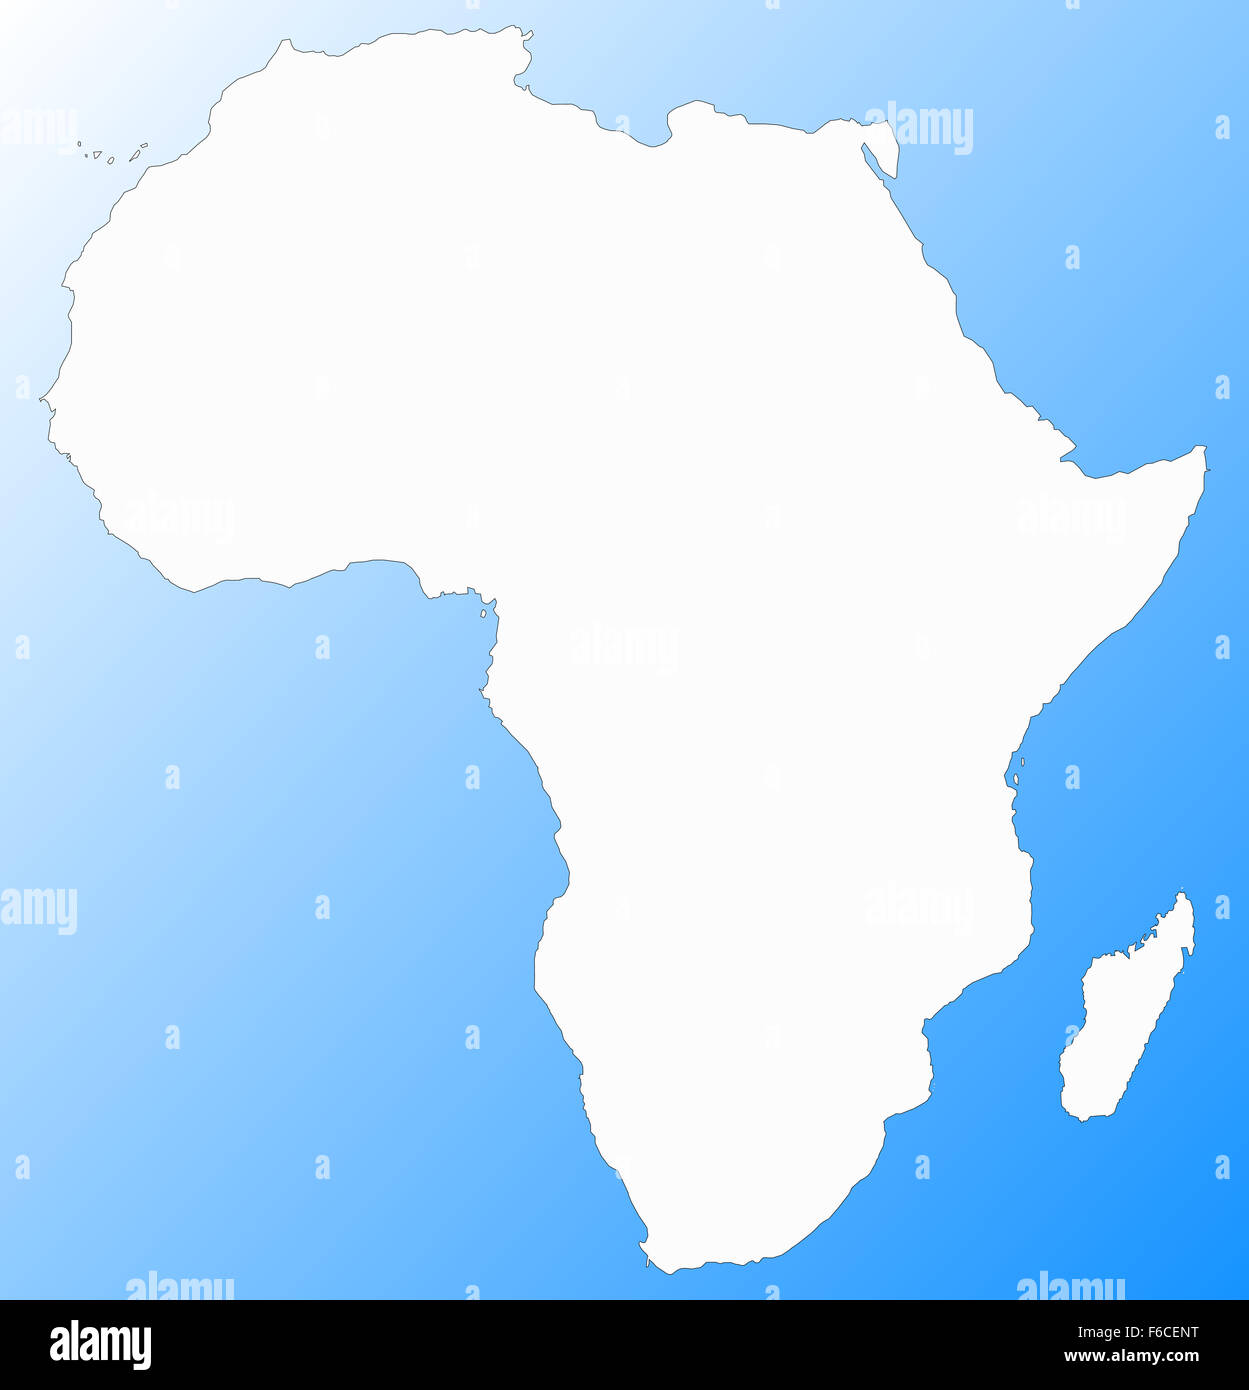 An Africa map on an ocean blue background Stock Photo